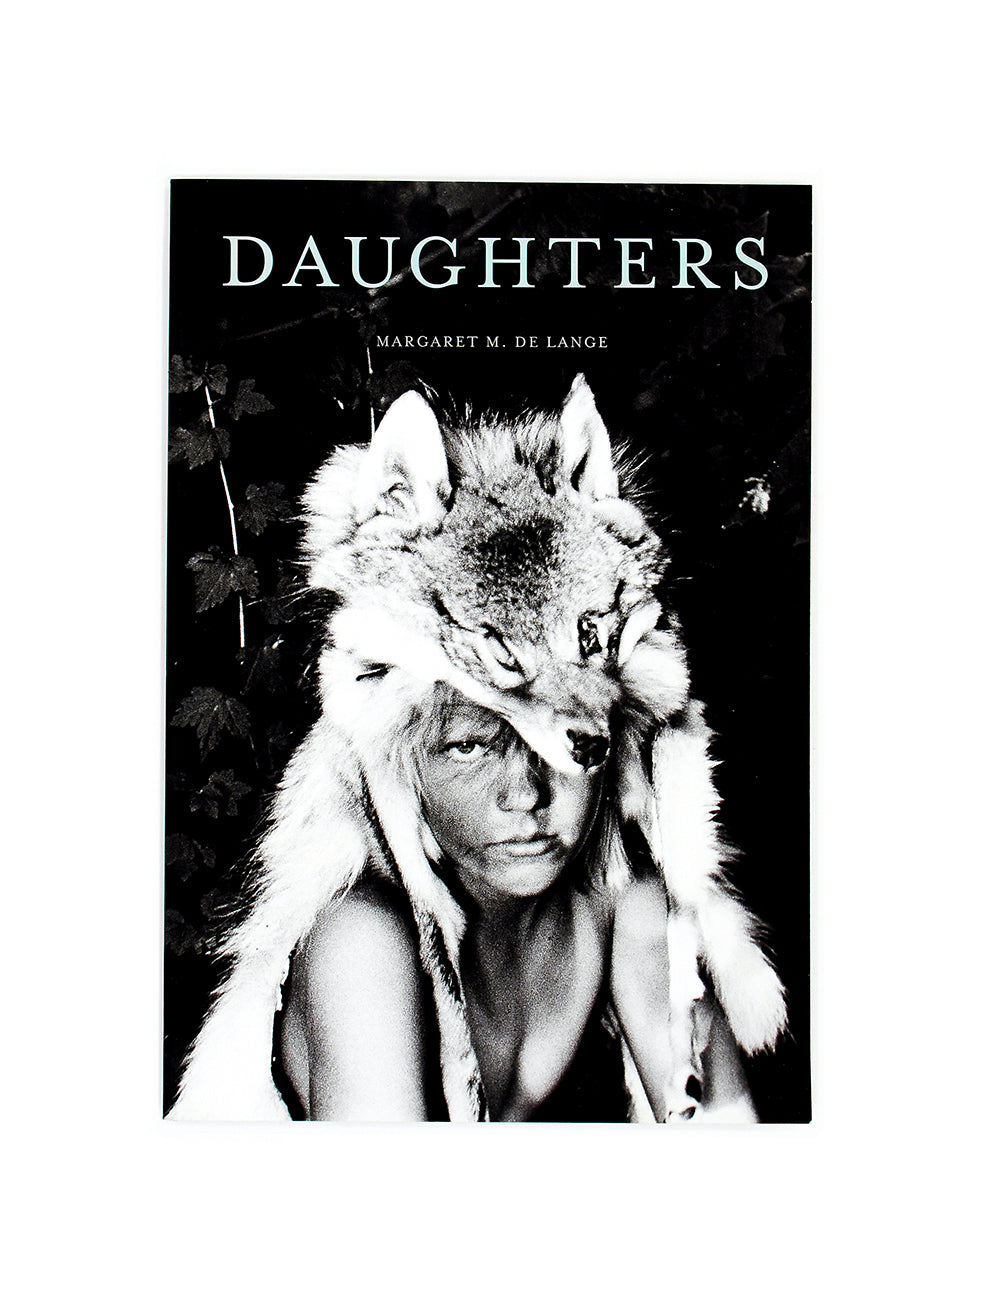 DAUGHTERS by Margaret M. de Lange